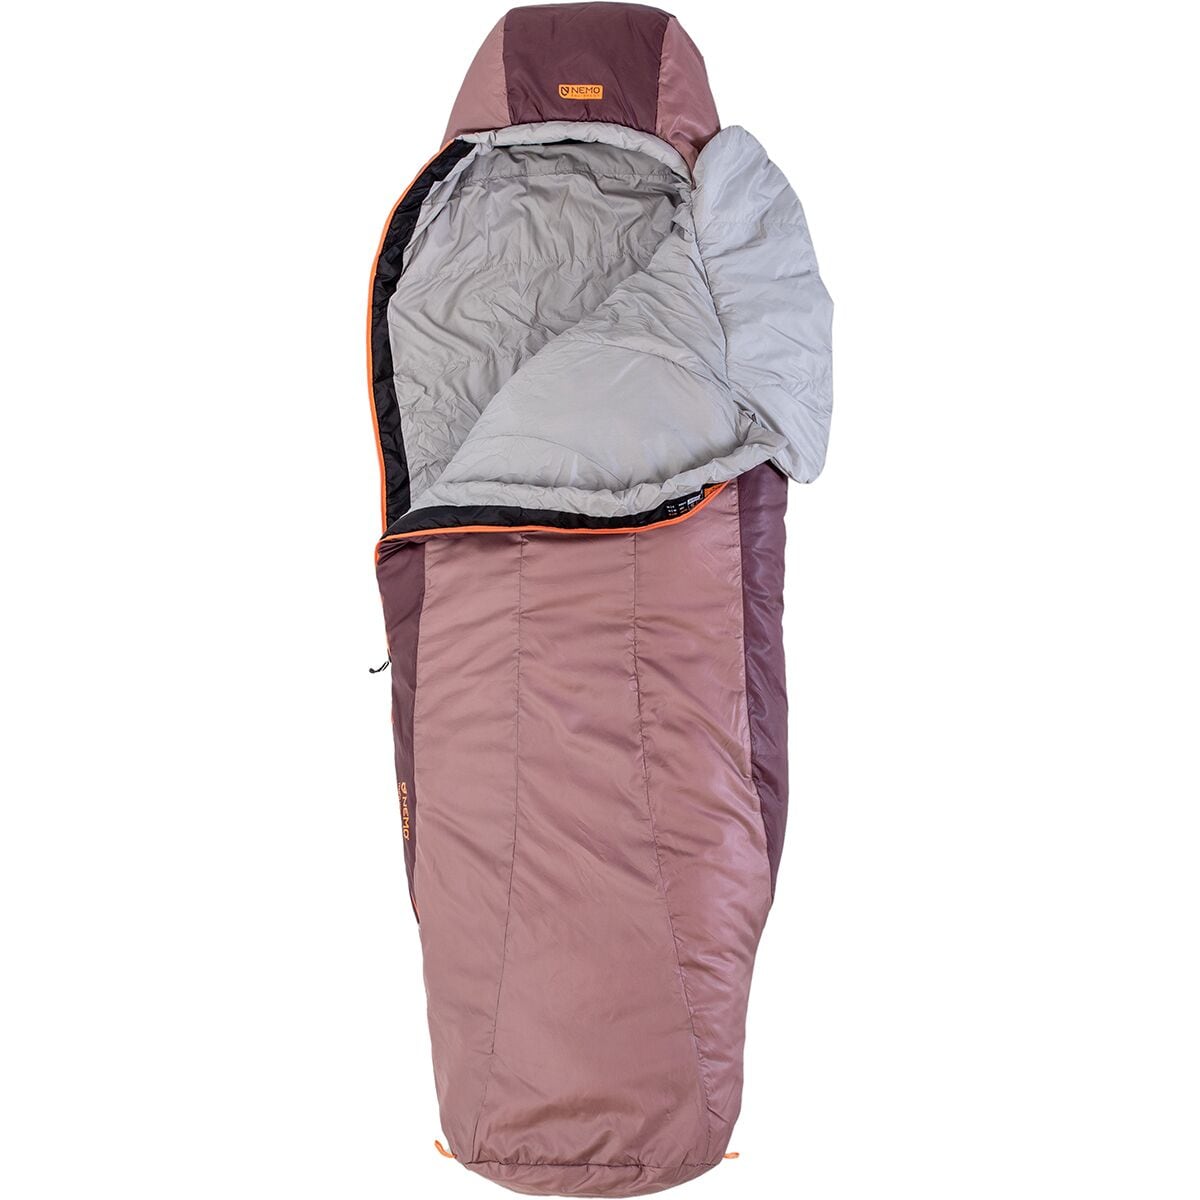 NEMO Equipment Inc. Tempo 35 Sleeping Bag: 35F Synthetic - Women's